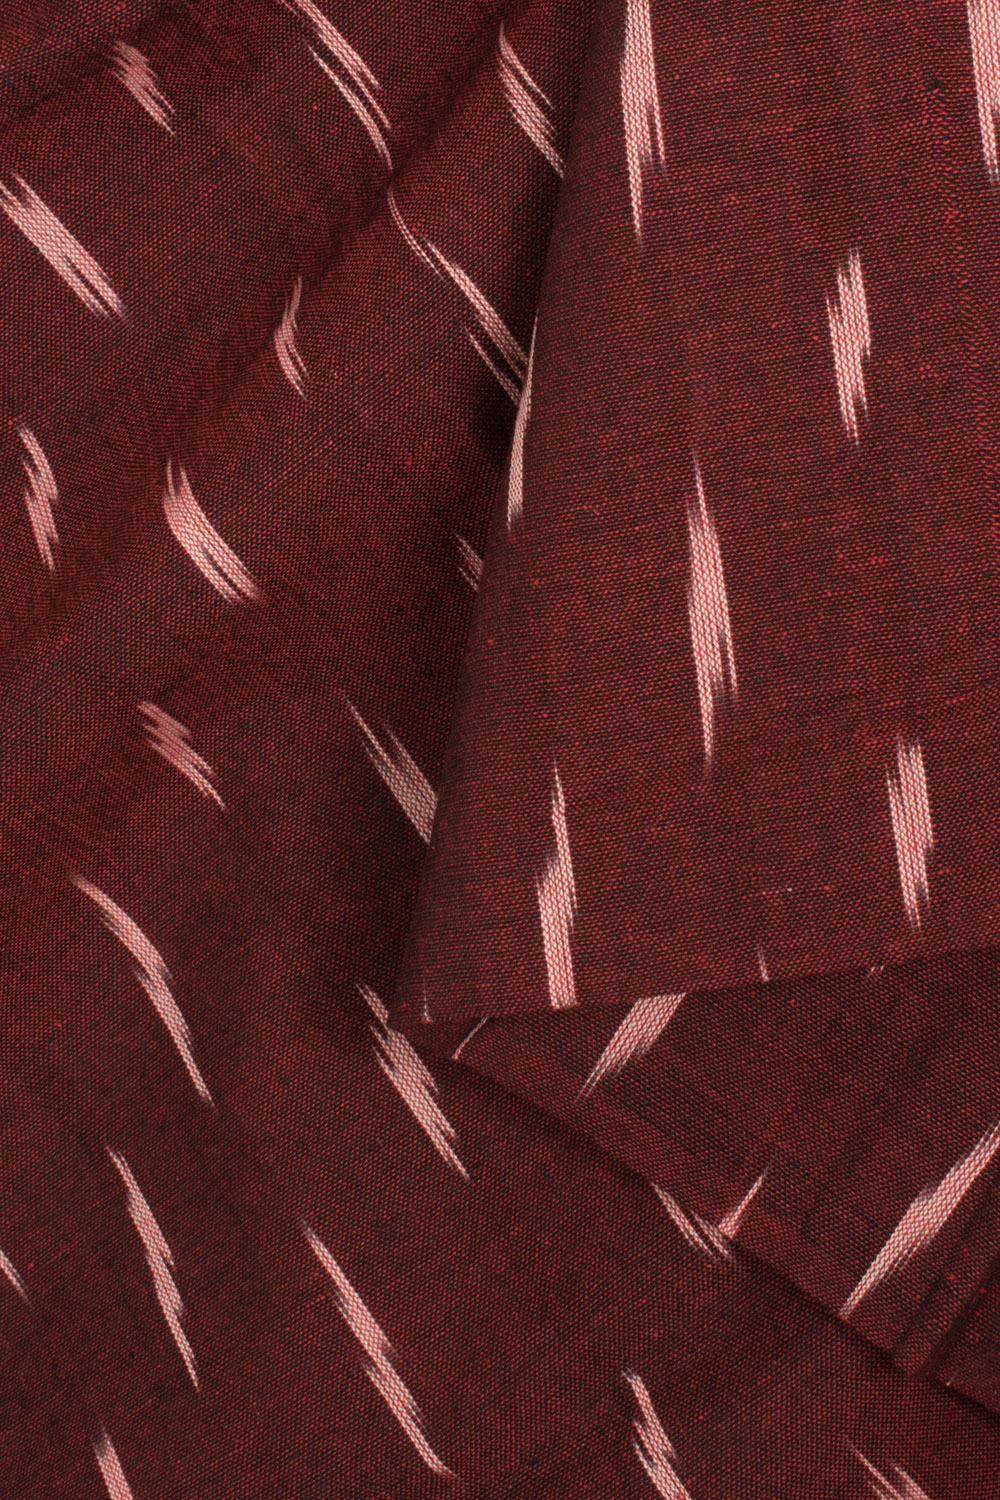 Handloom Ikat Cotton 3-Piece Salwar Suit Material 10058790